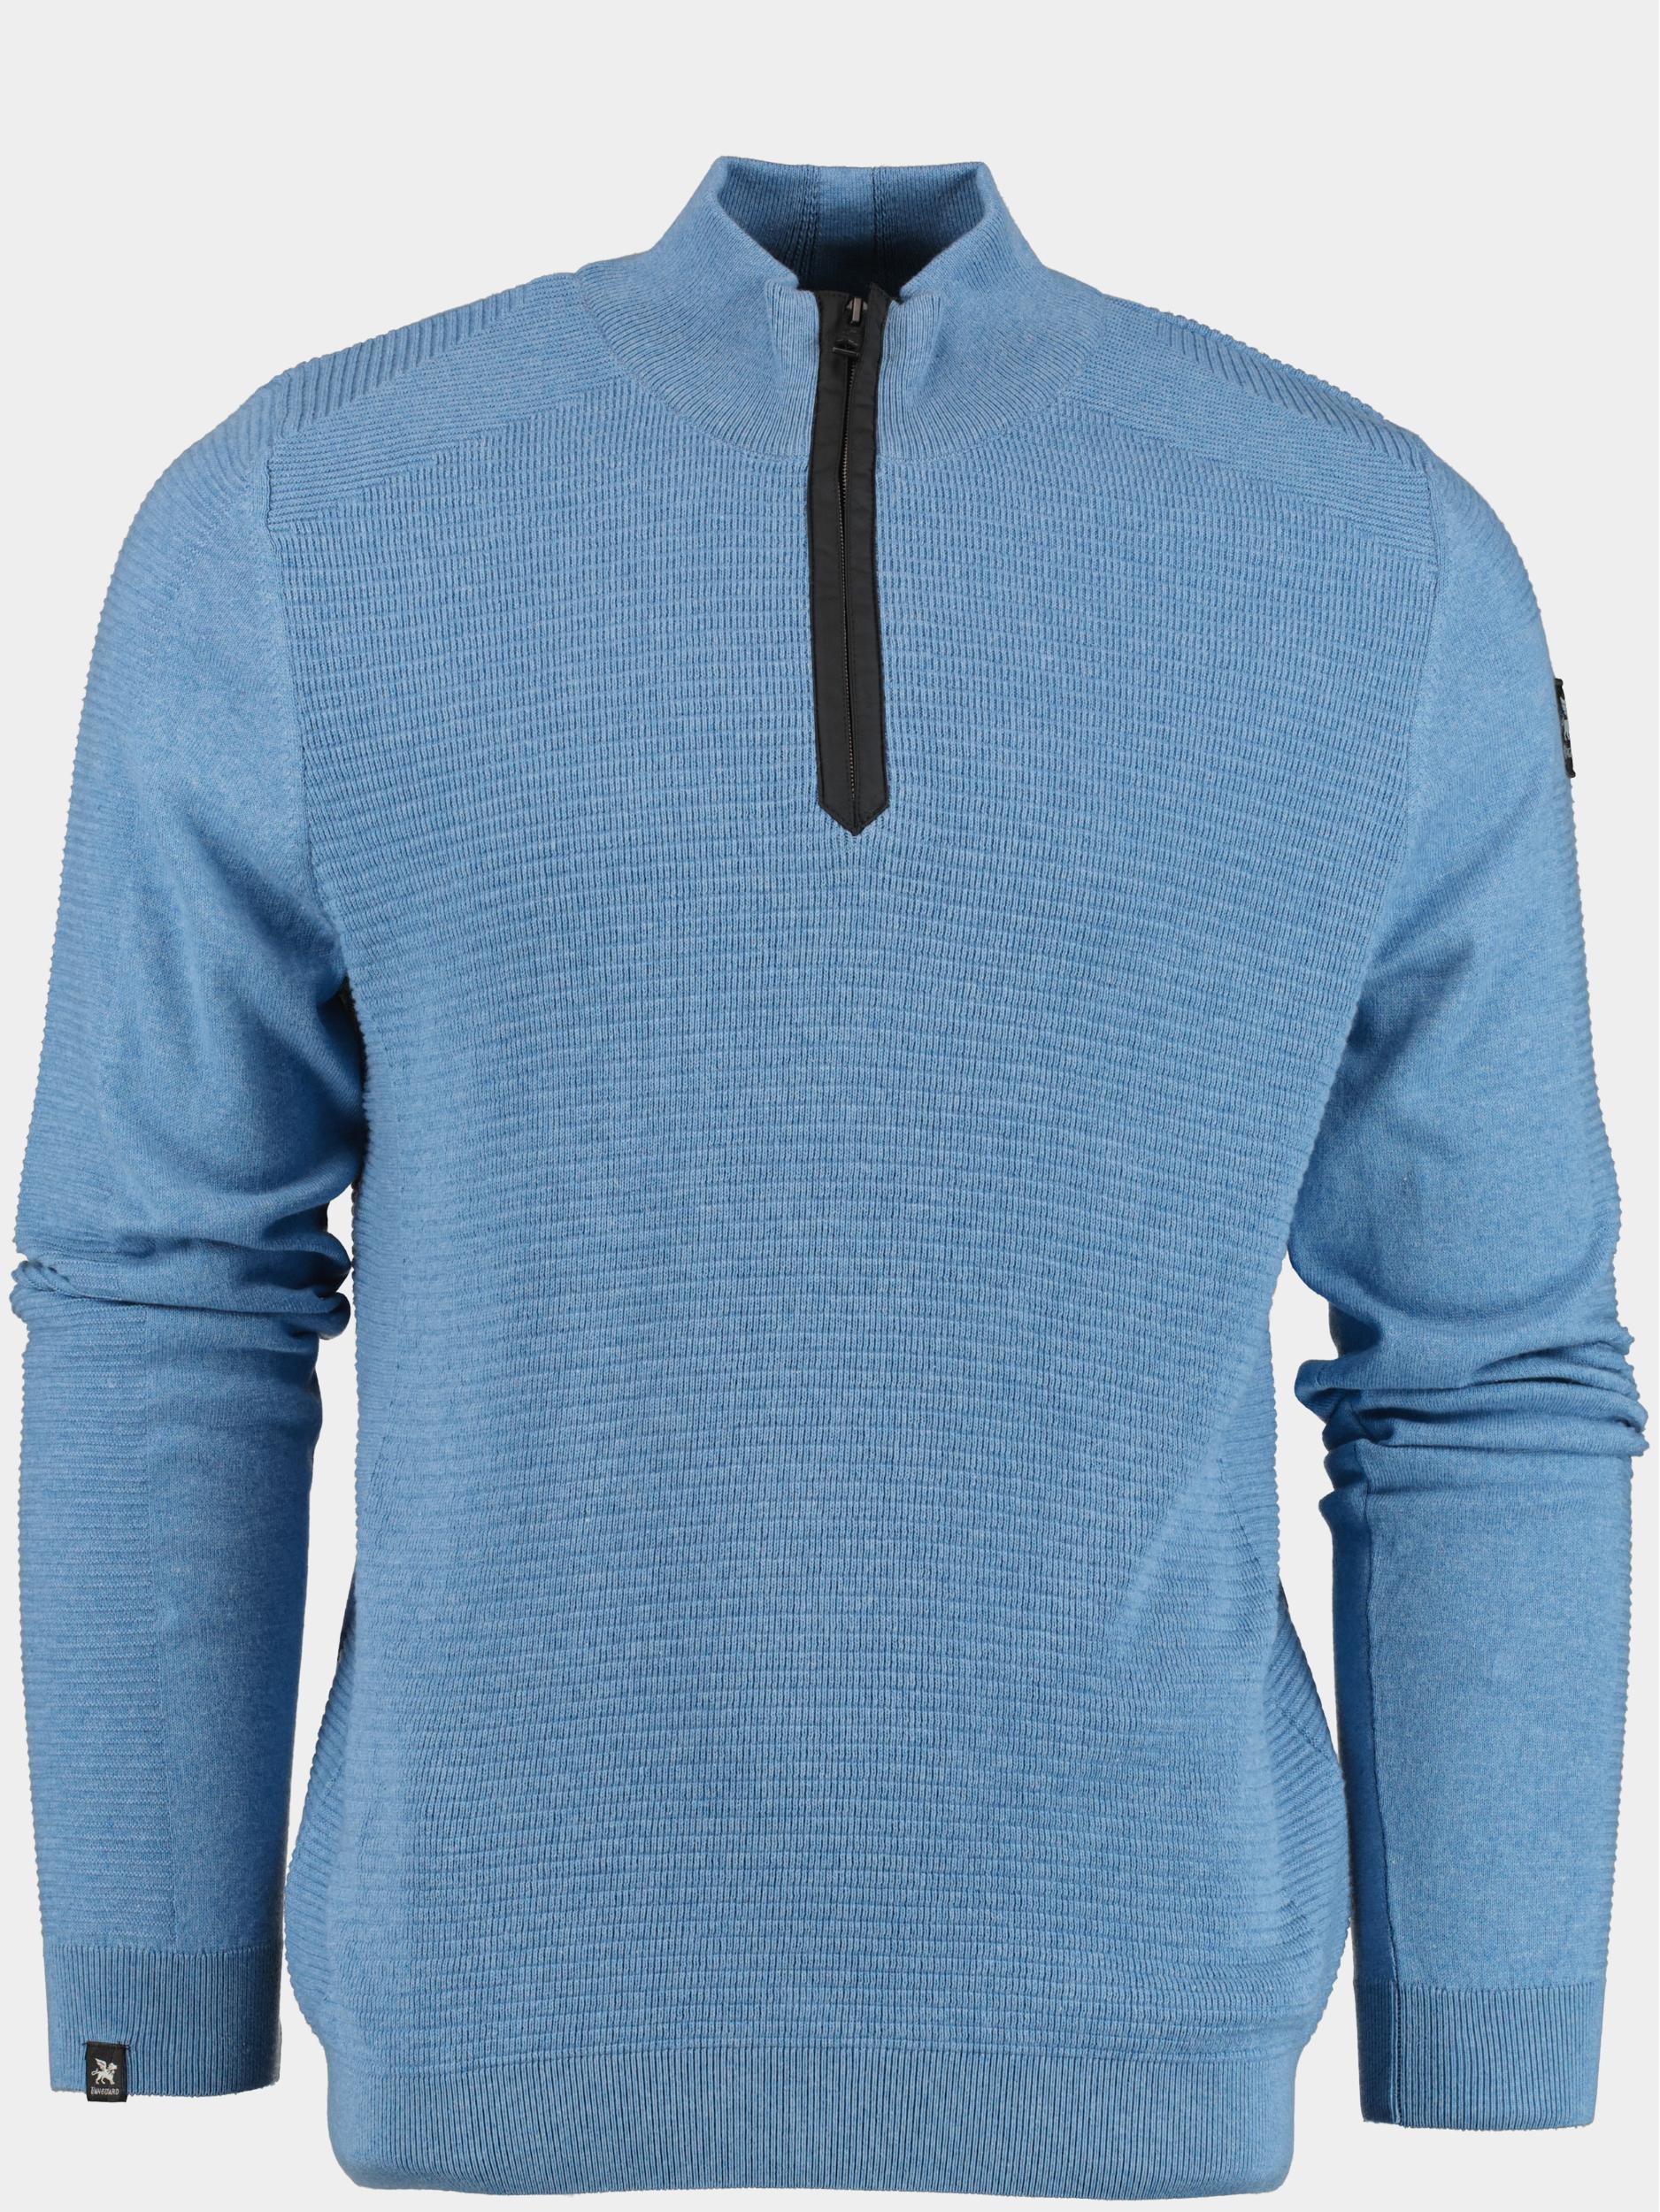 Vanguard Pullover Blauw Half zip collar cotton  struc VKW2308308/5709